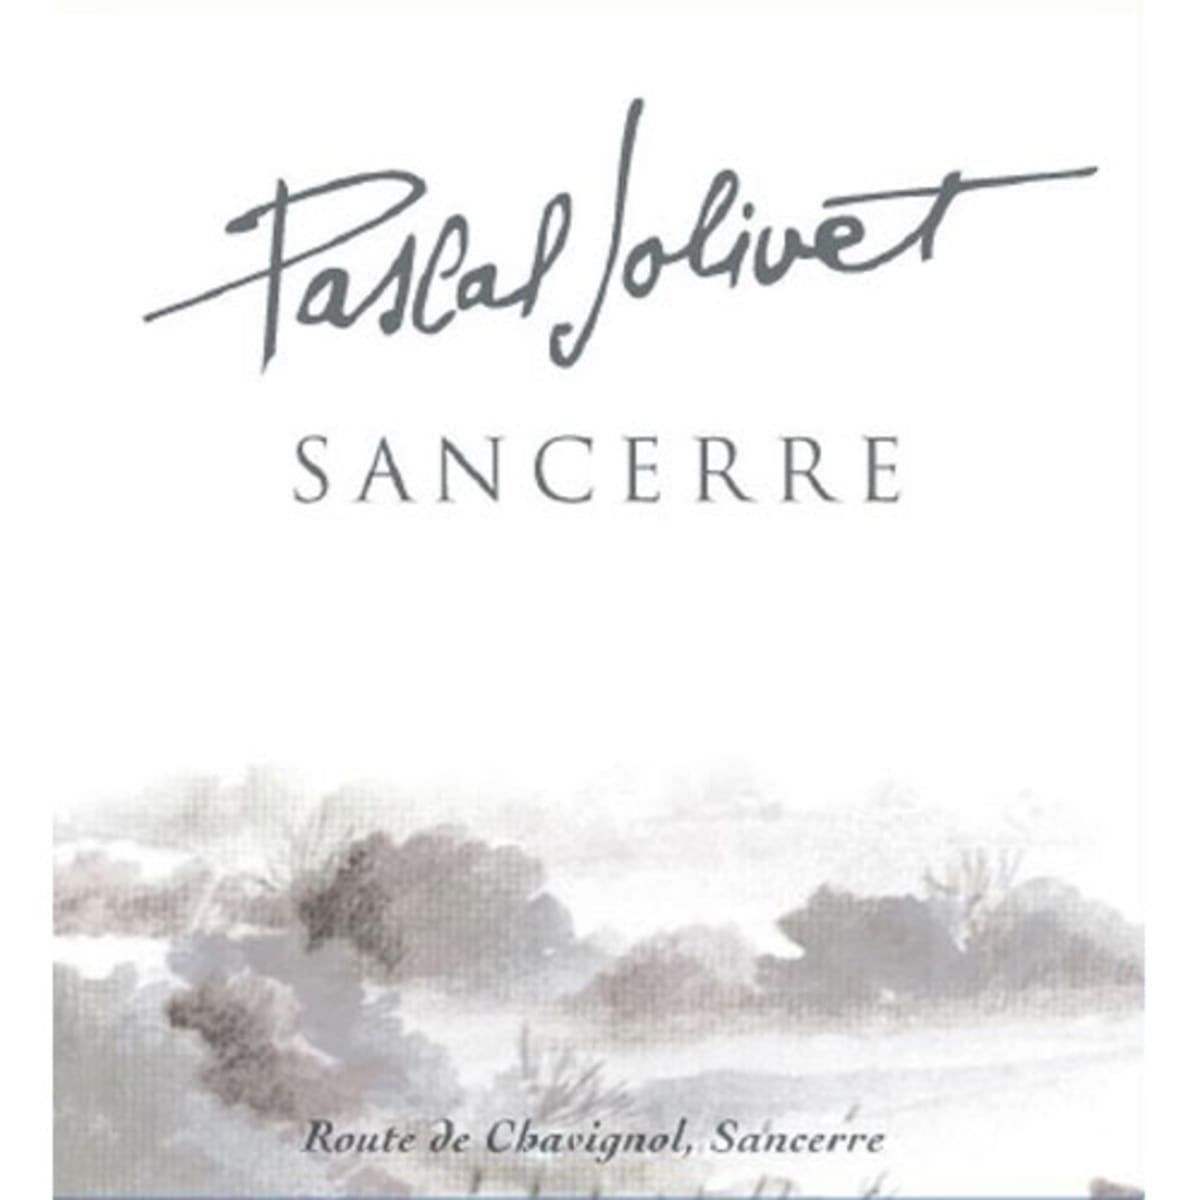 Pascal Jolivet Sancerre 2015 Front Label